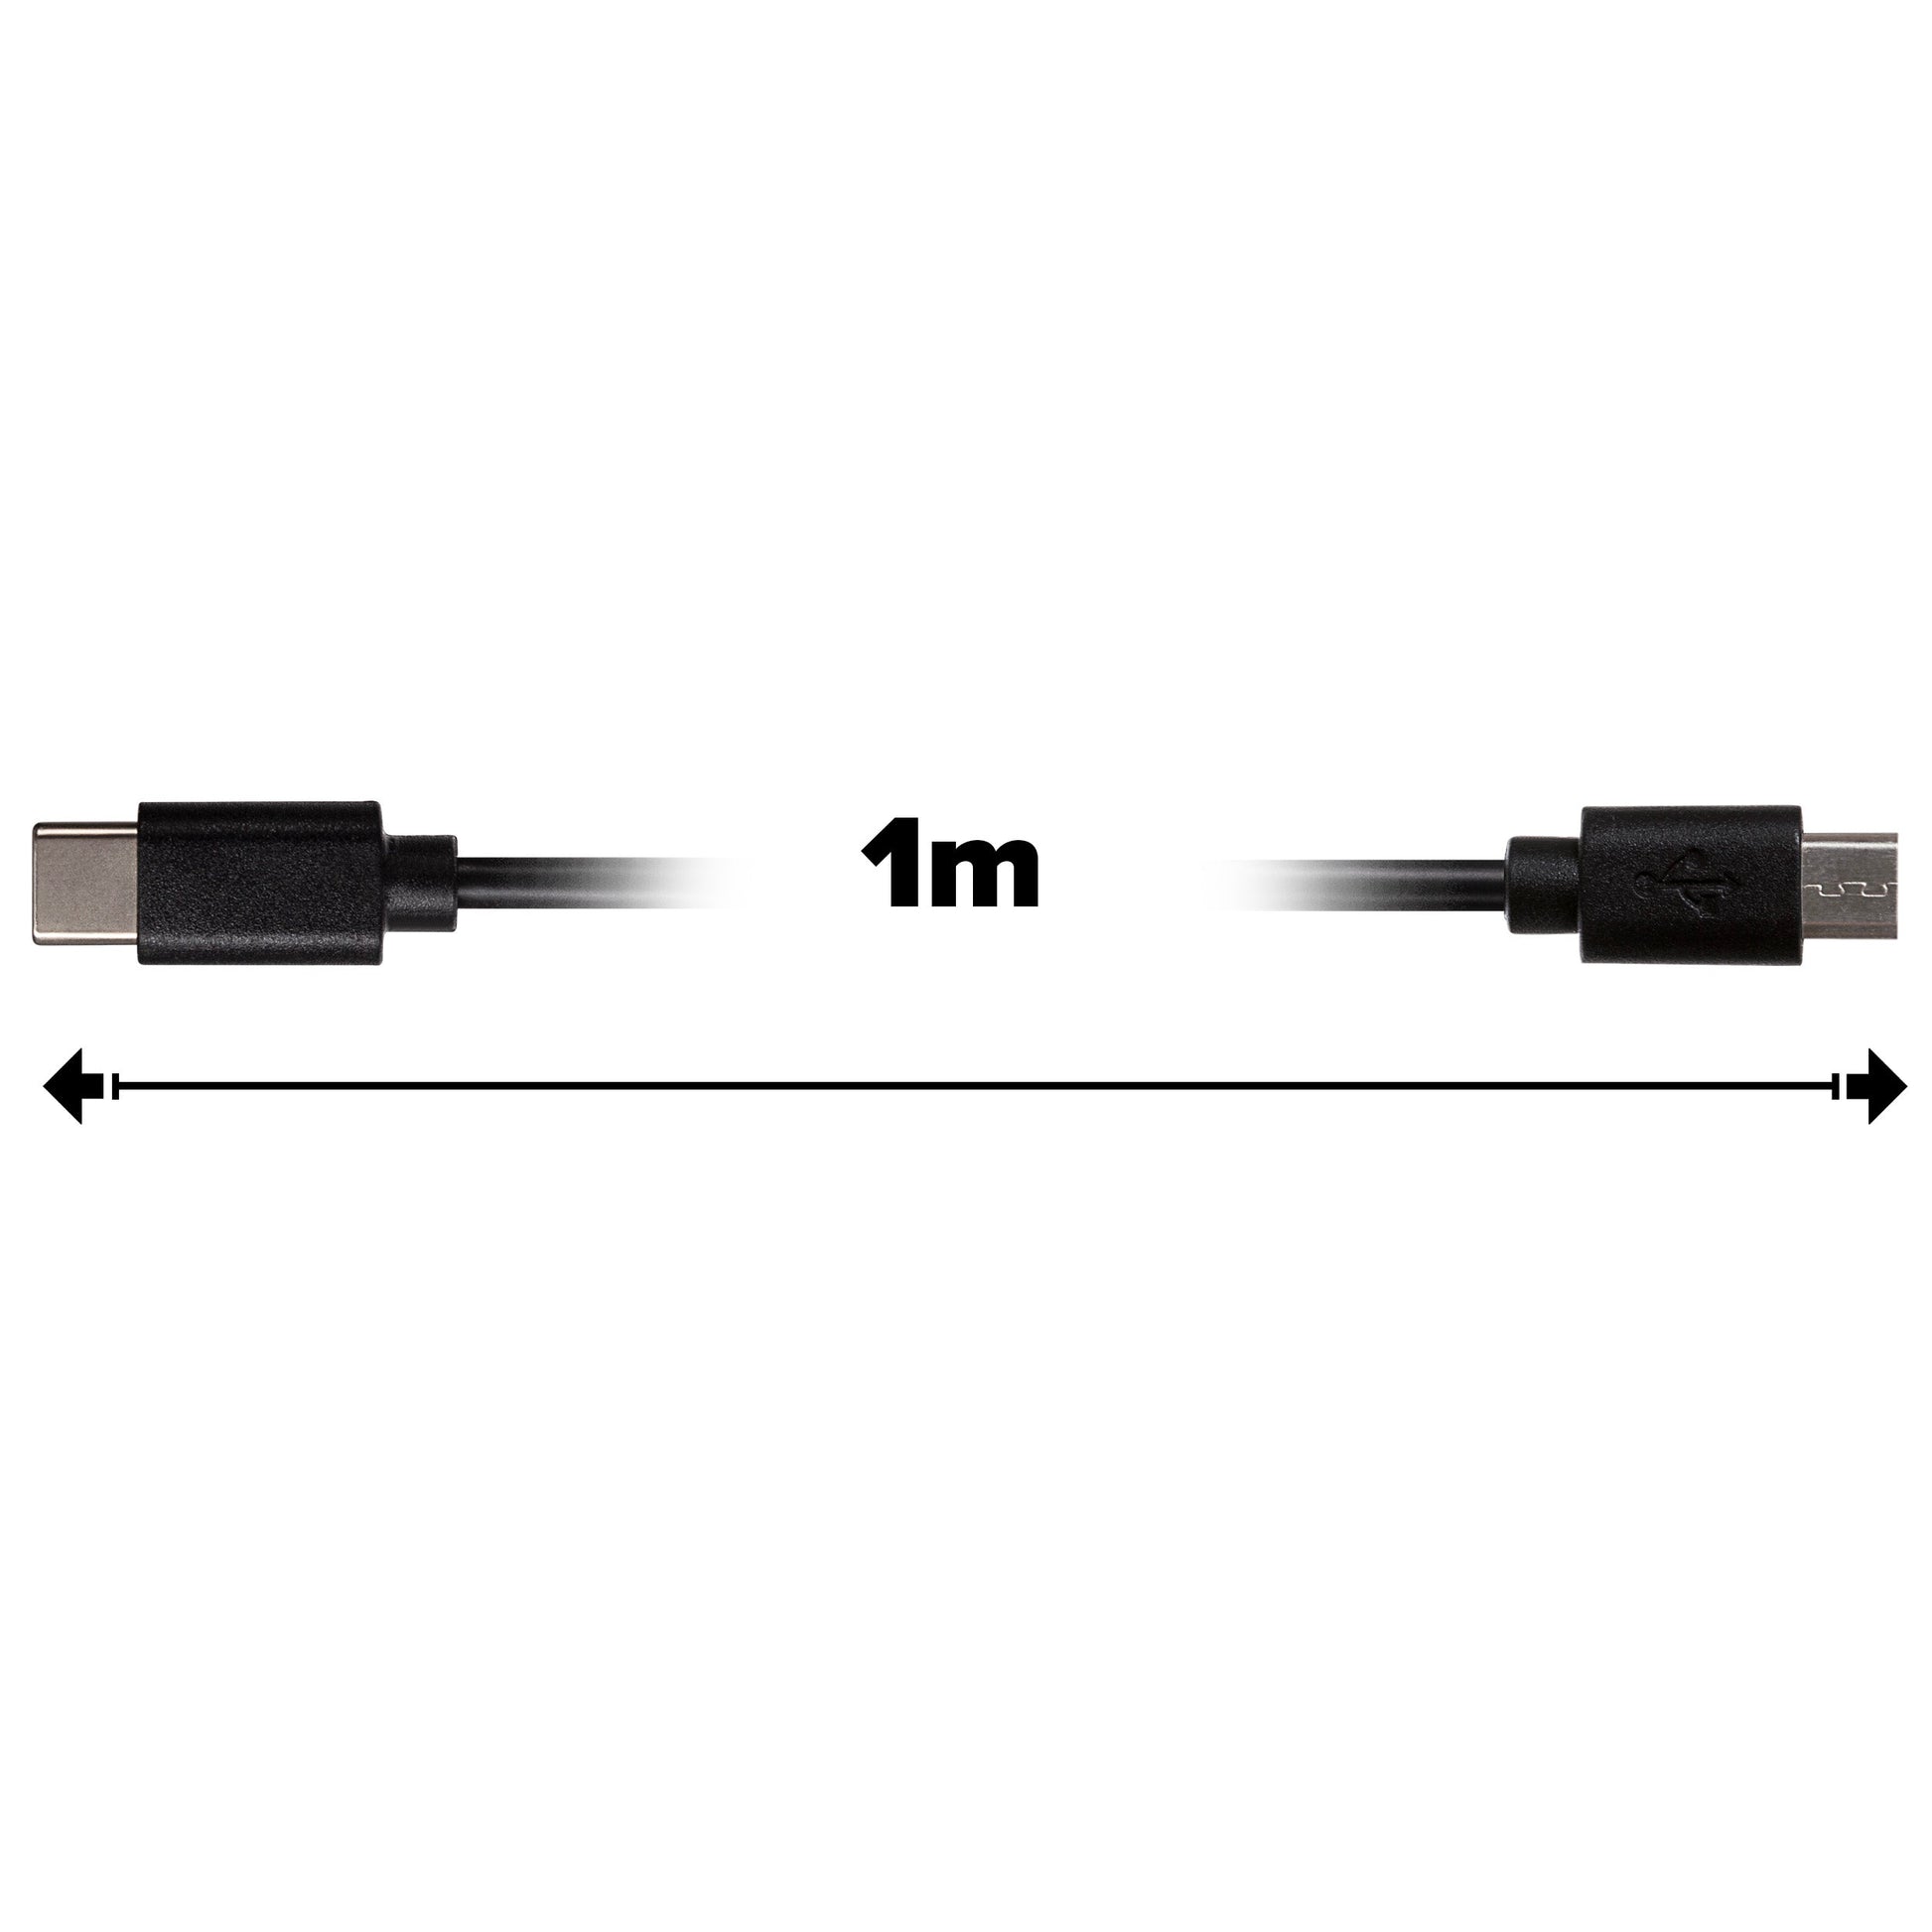 Maplin USB-C to Micro USB-B Cable - Black, 1m - maplin.co.uk